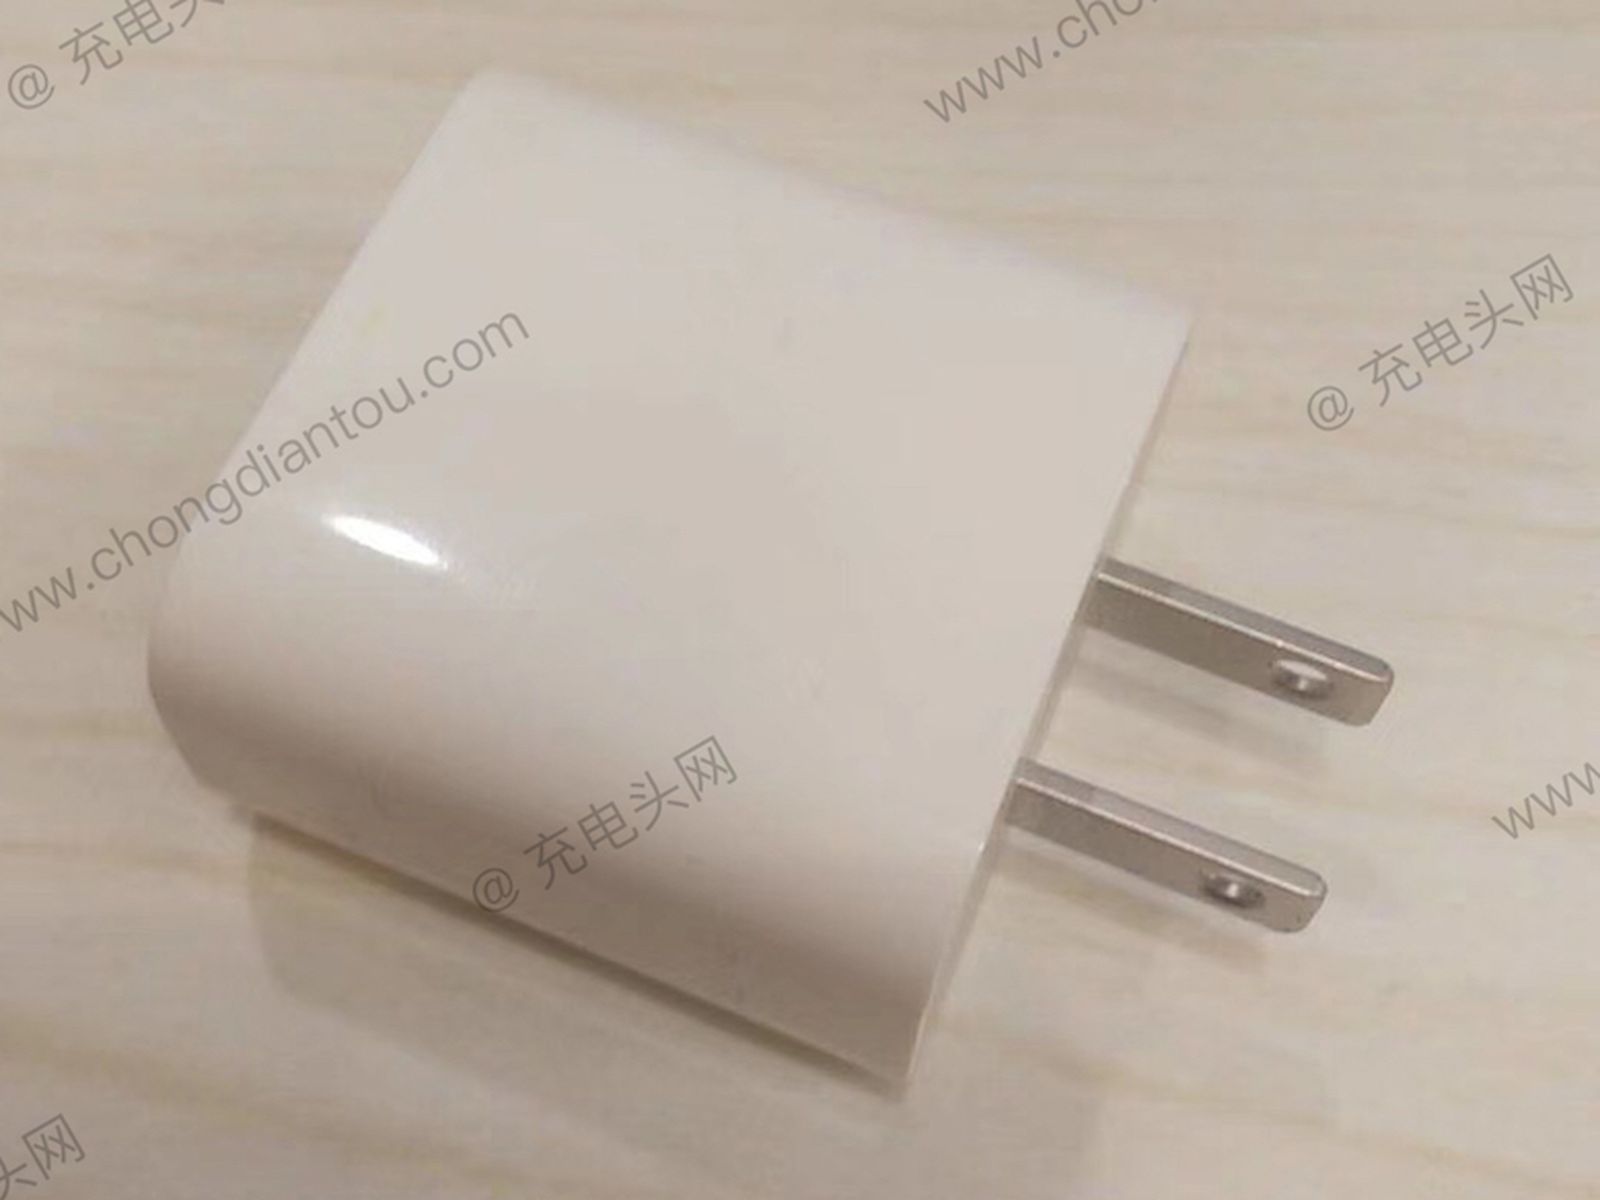 Apple's Rumored 18W USB-C iPhone Power Adapter Prototype Shown in New - MacRumors